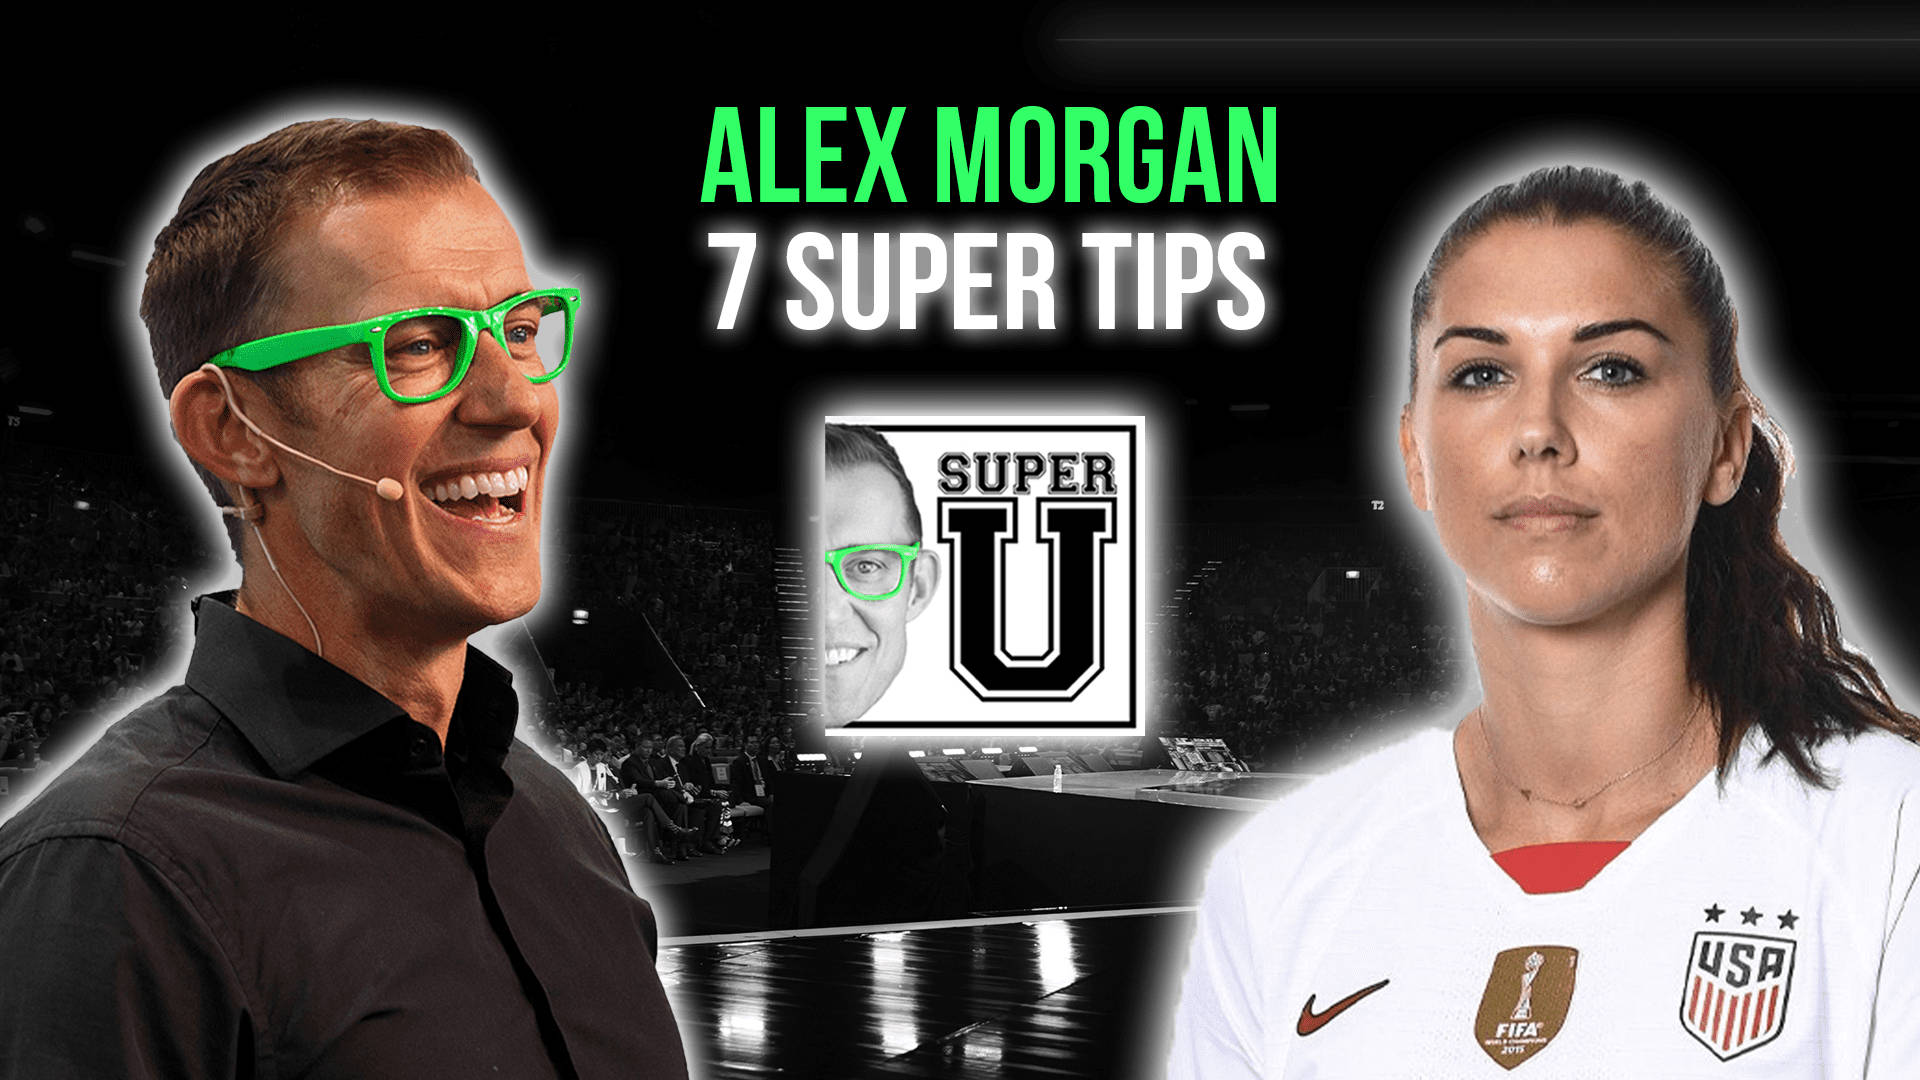 Alex Morgan On Super U Show Background